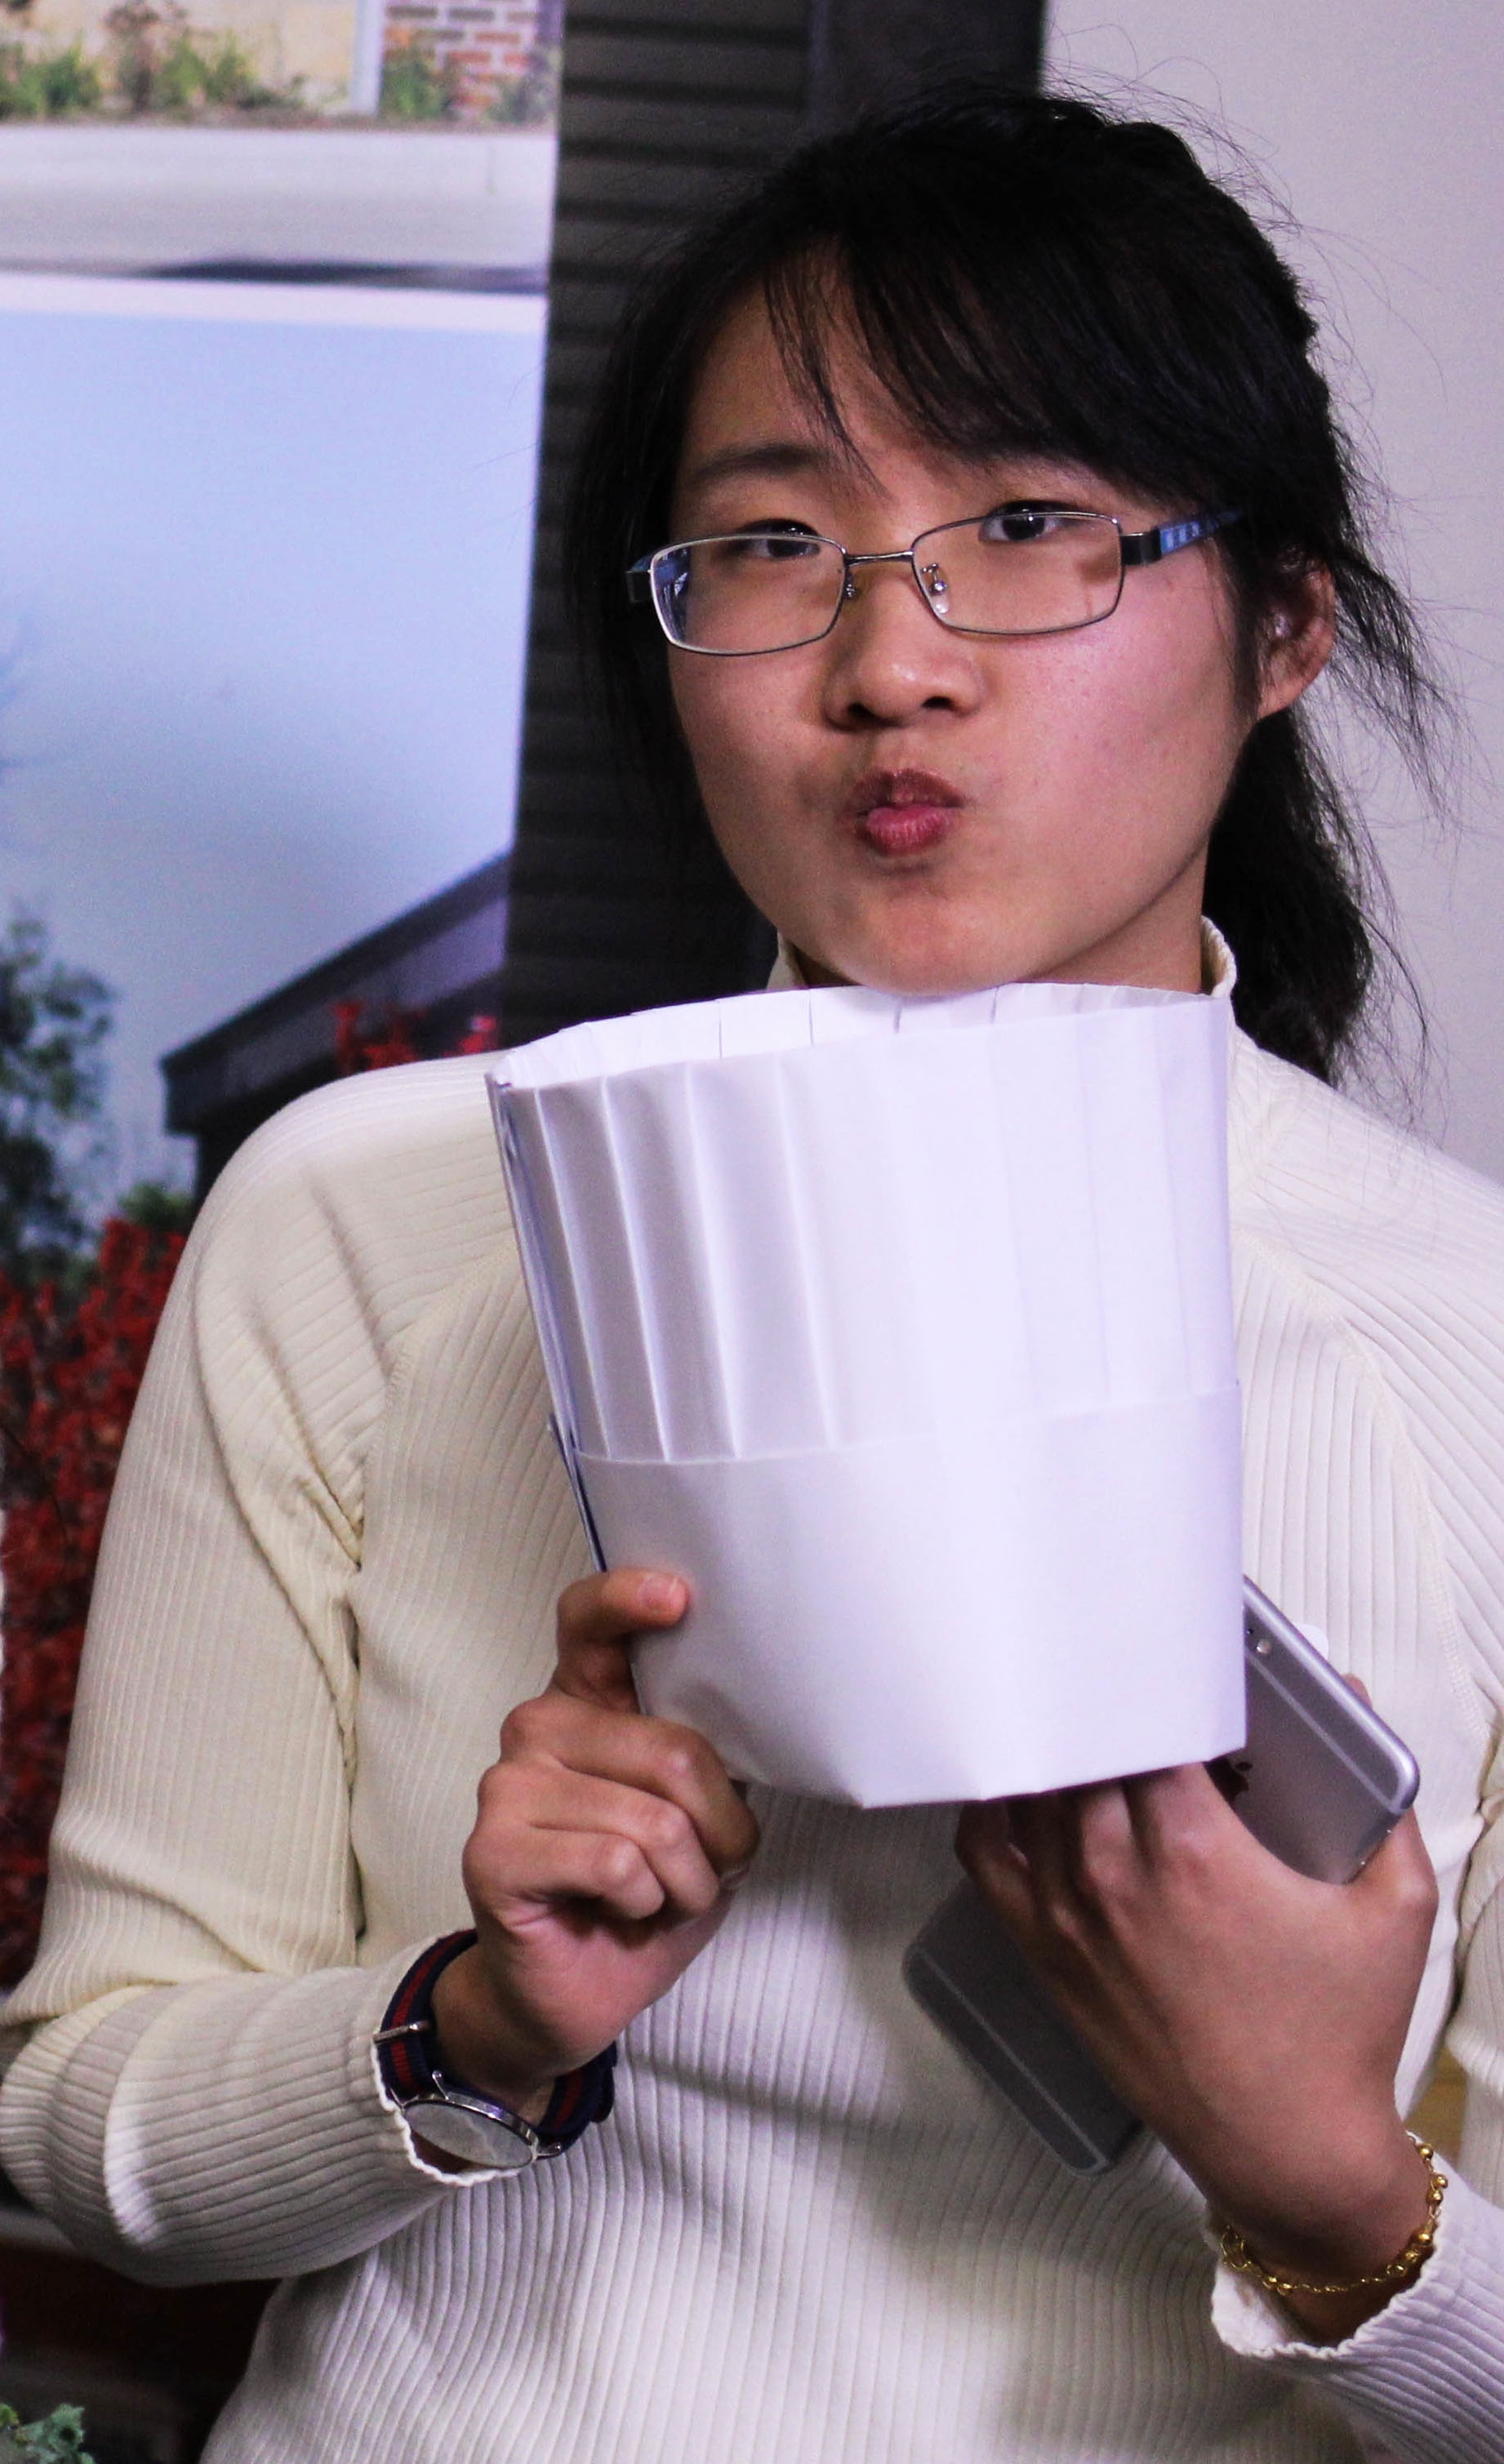 Lingfan Li, a Chinese exchange student, at UWRF's International Thanksgiving last fall. (Photo by Chris Gregg)